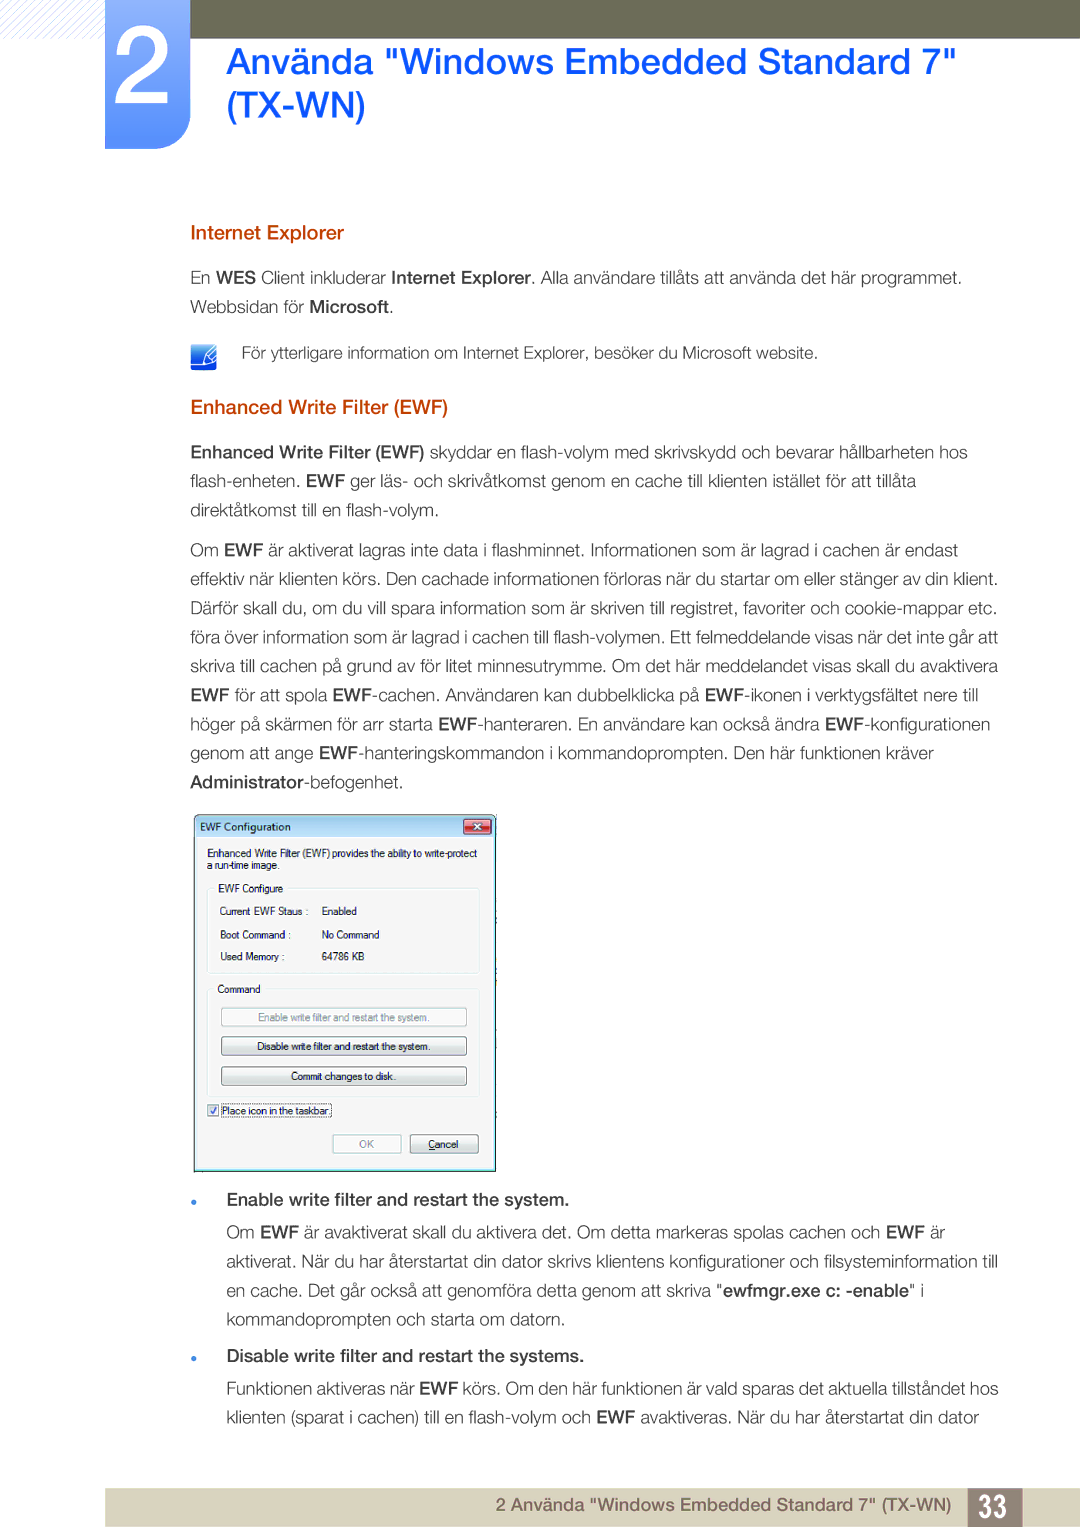 Samsung LF-TXWNF/EN, LF-TXWND/EN manual Internet Explorer, Enhanced Write Filter EWF 